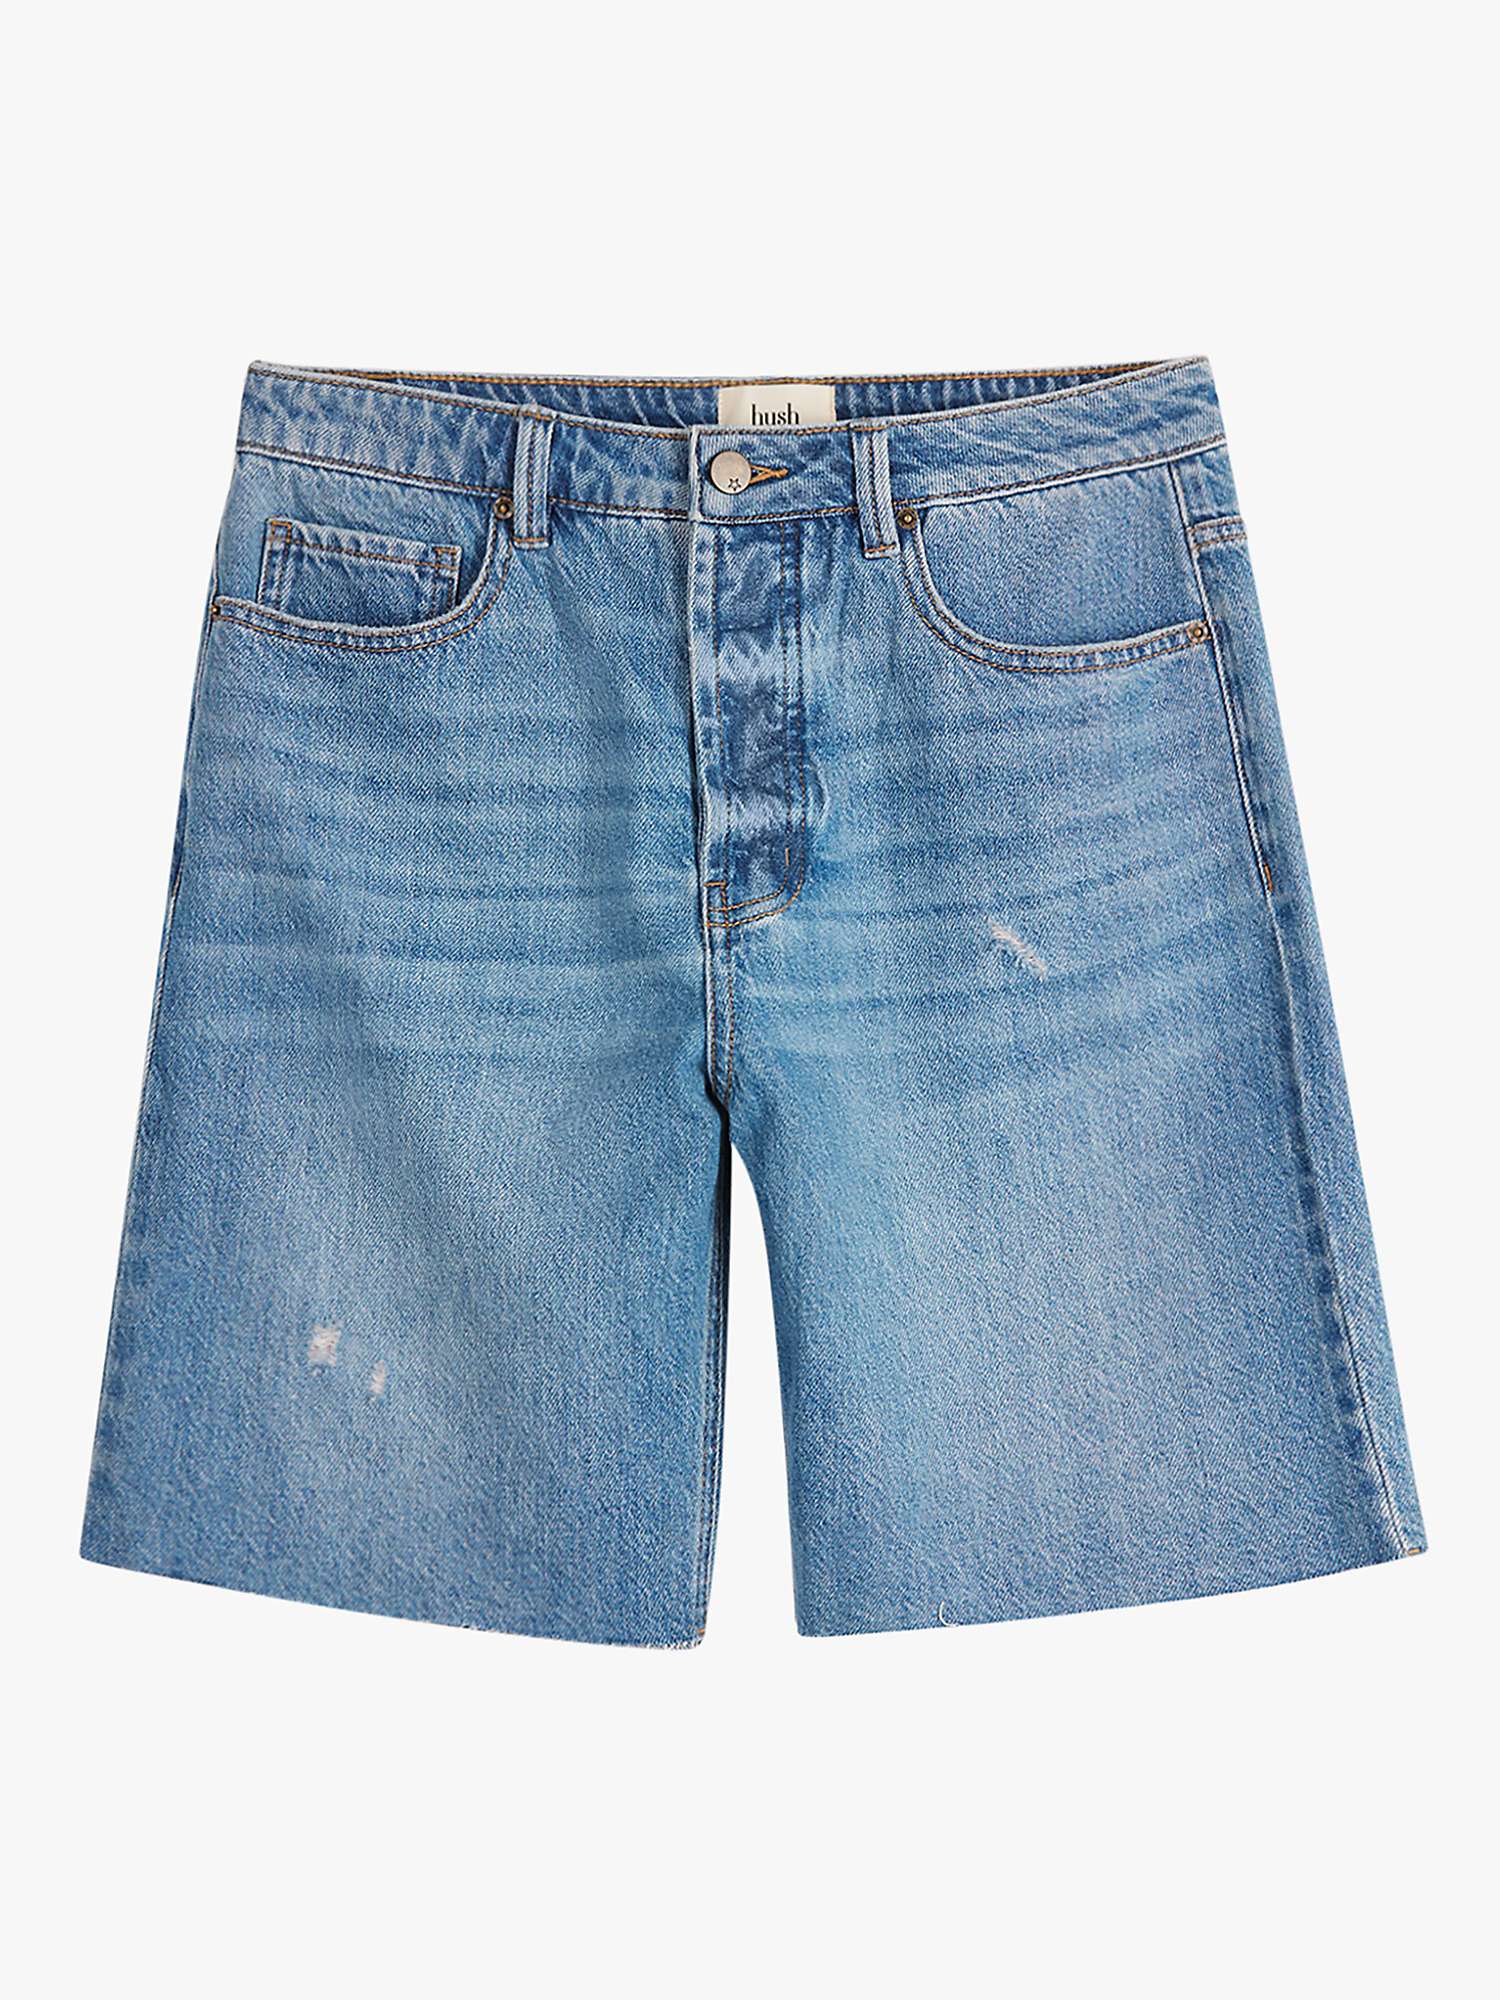 Buy HUSH Lloyd Boyfriend Denim Shorts, Mid Authentic Wash Online at johnlewis.com